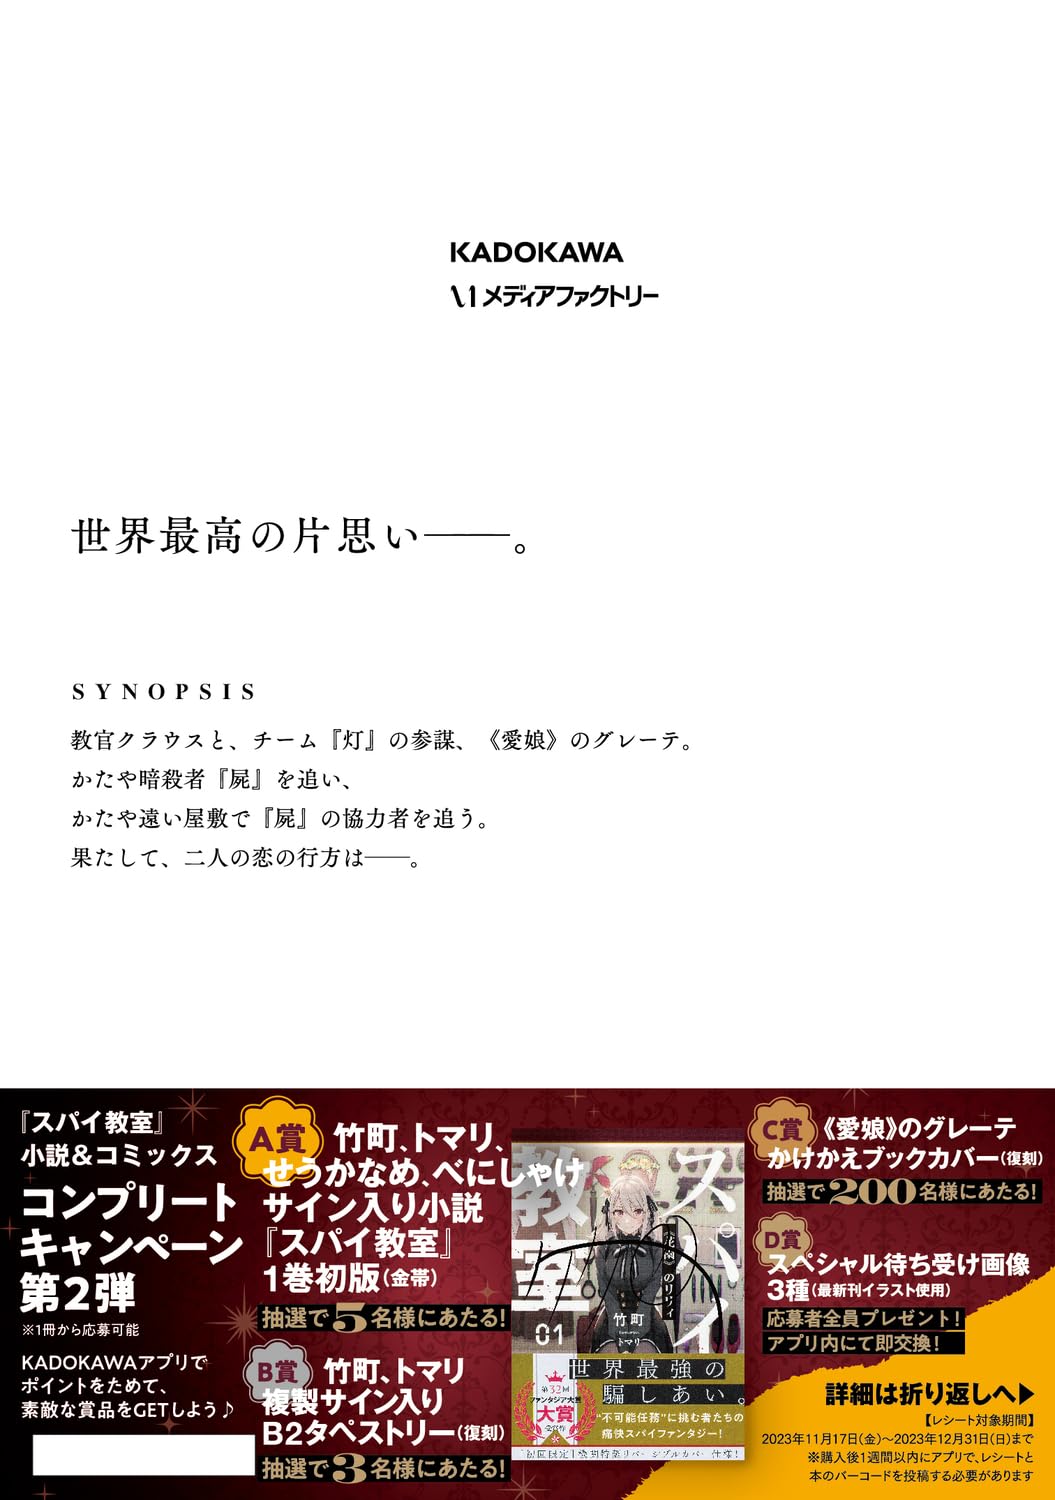 Spy Classroom (Spy Kyoushitsu) 09 Garakuta no Annette – Japanese Book Store